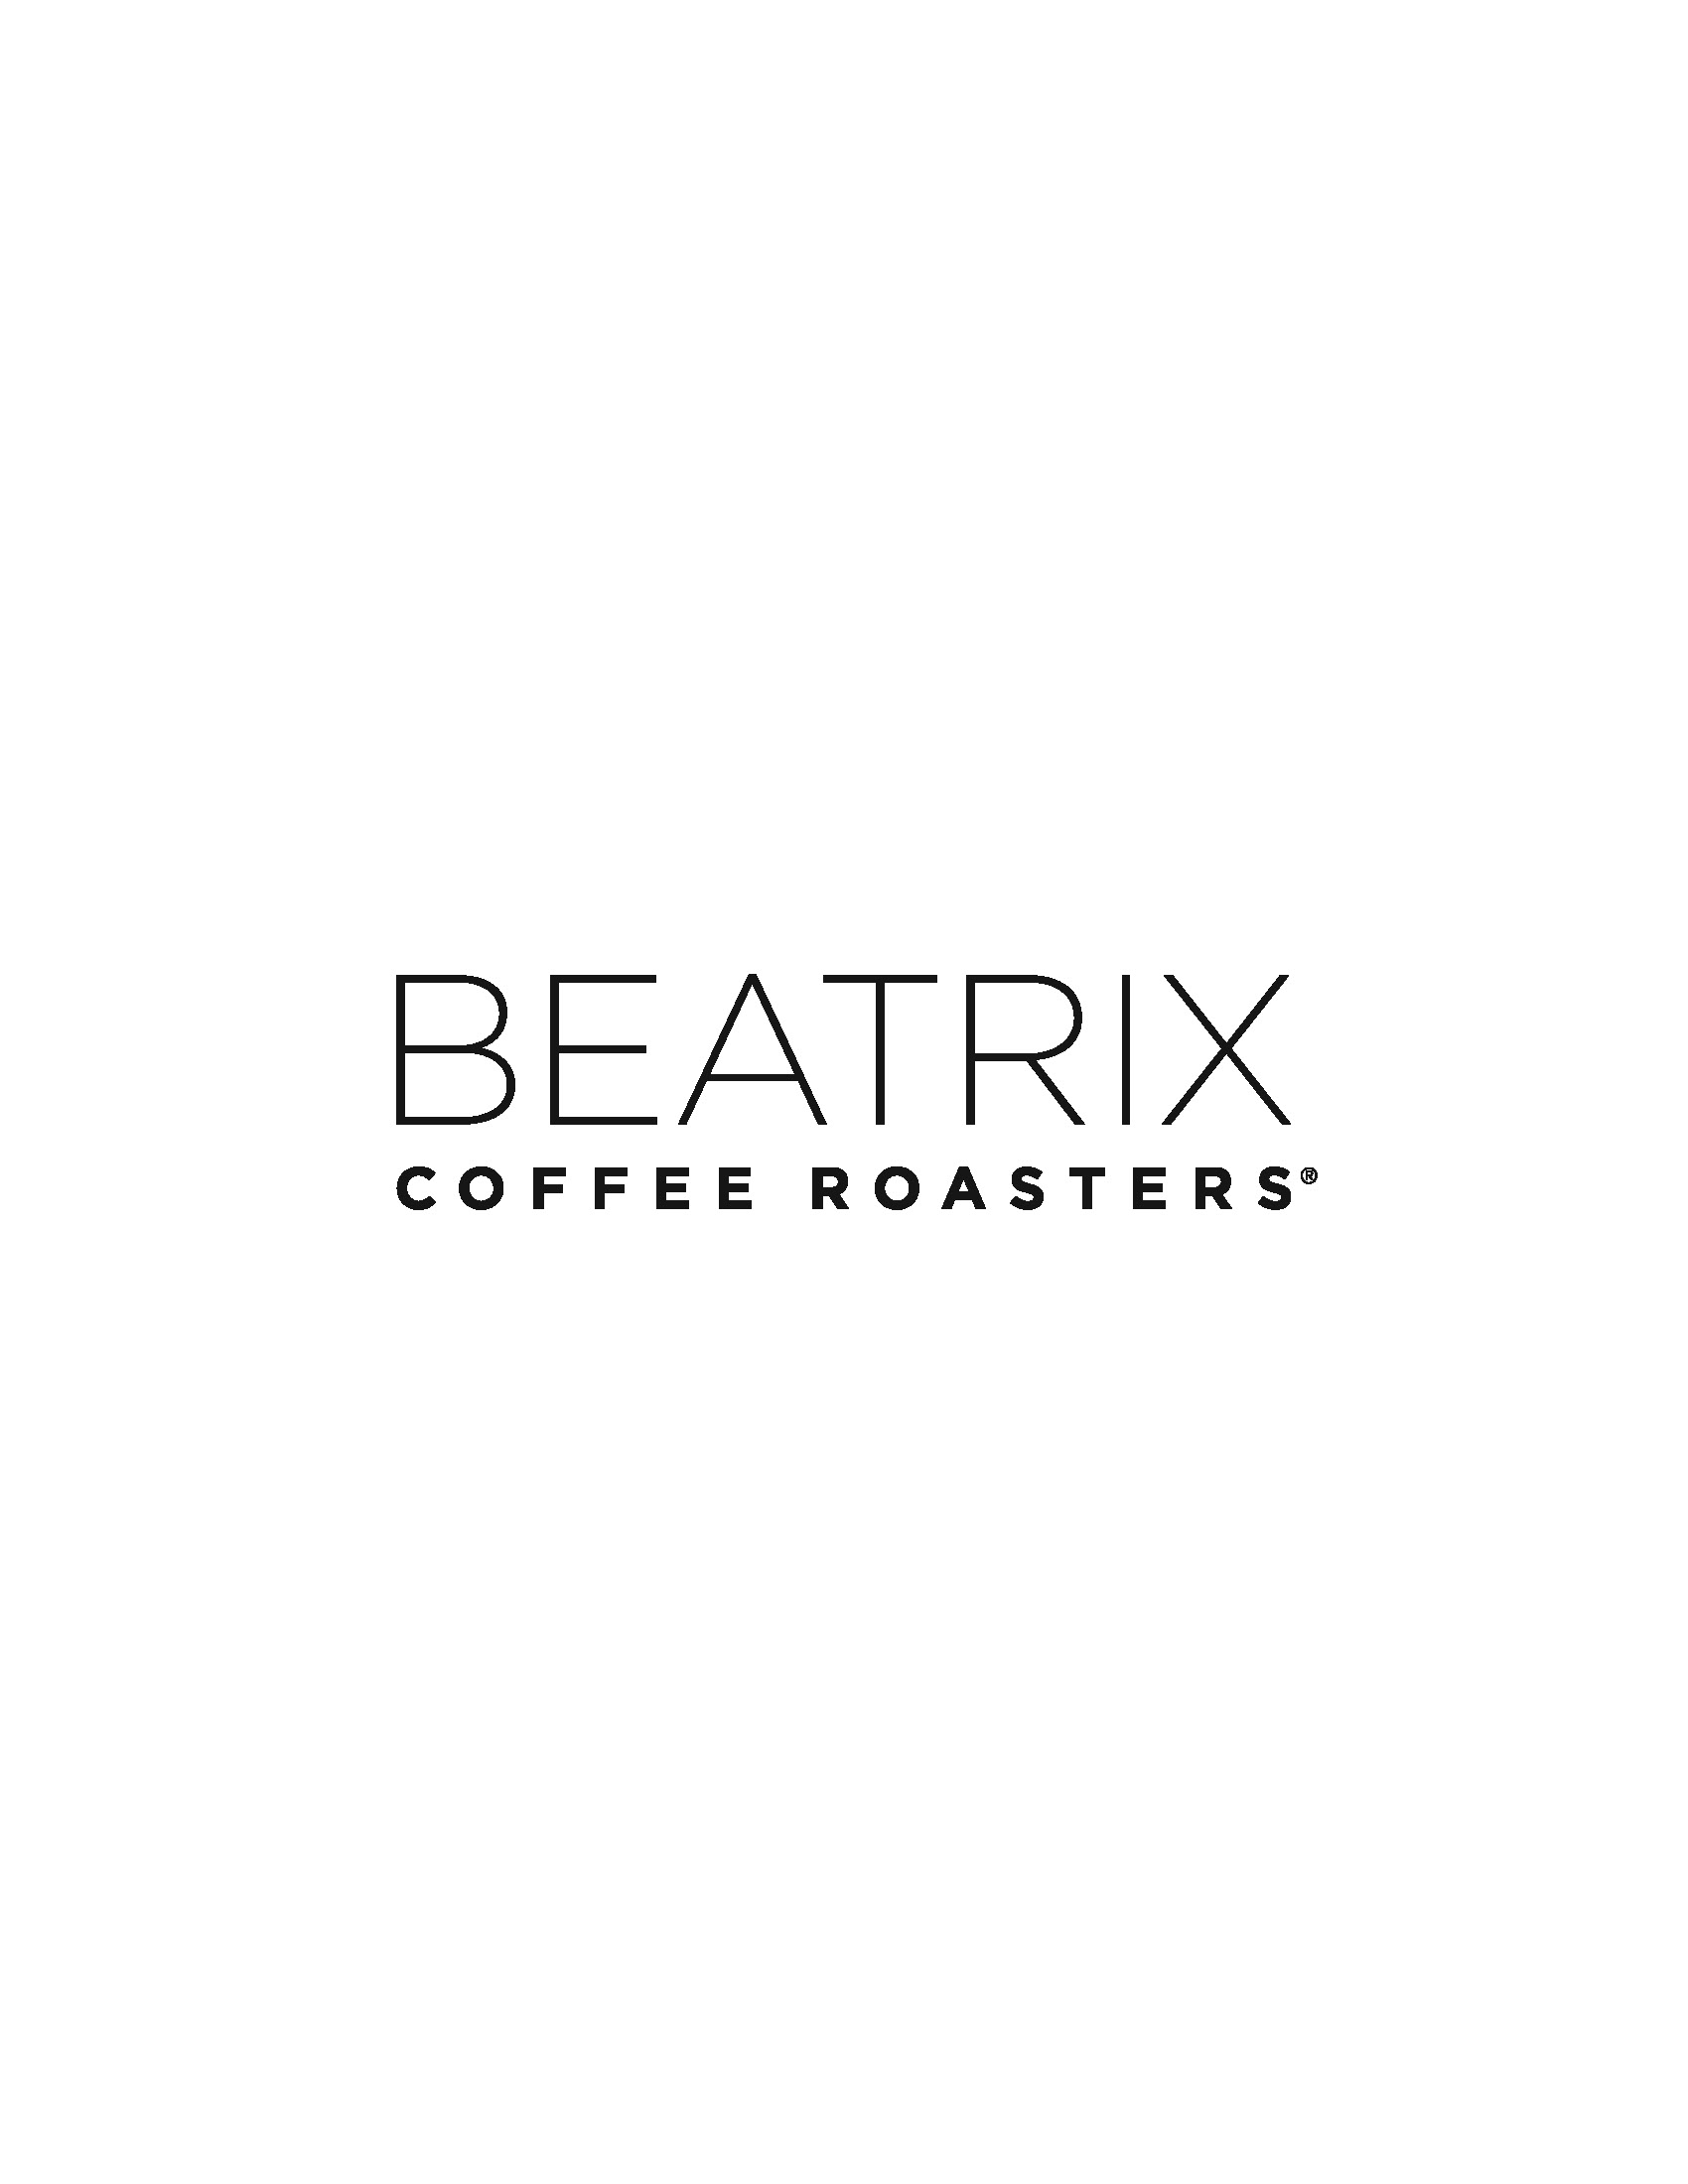 beatrix coffee roasters